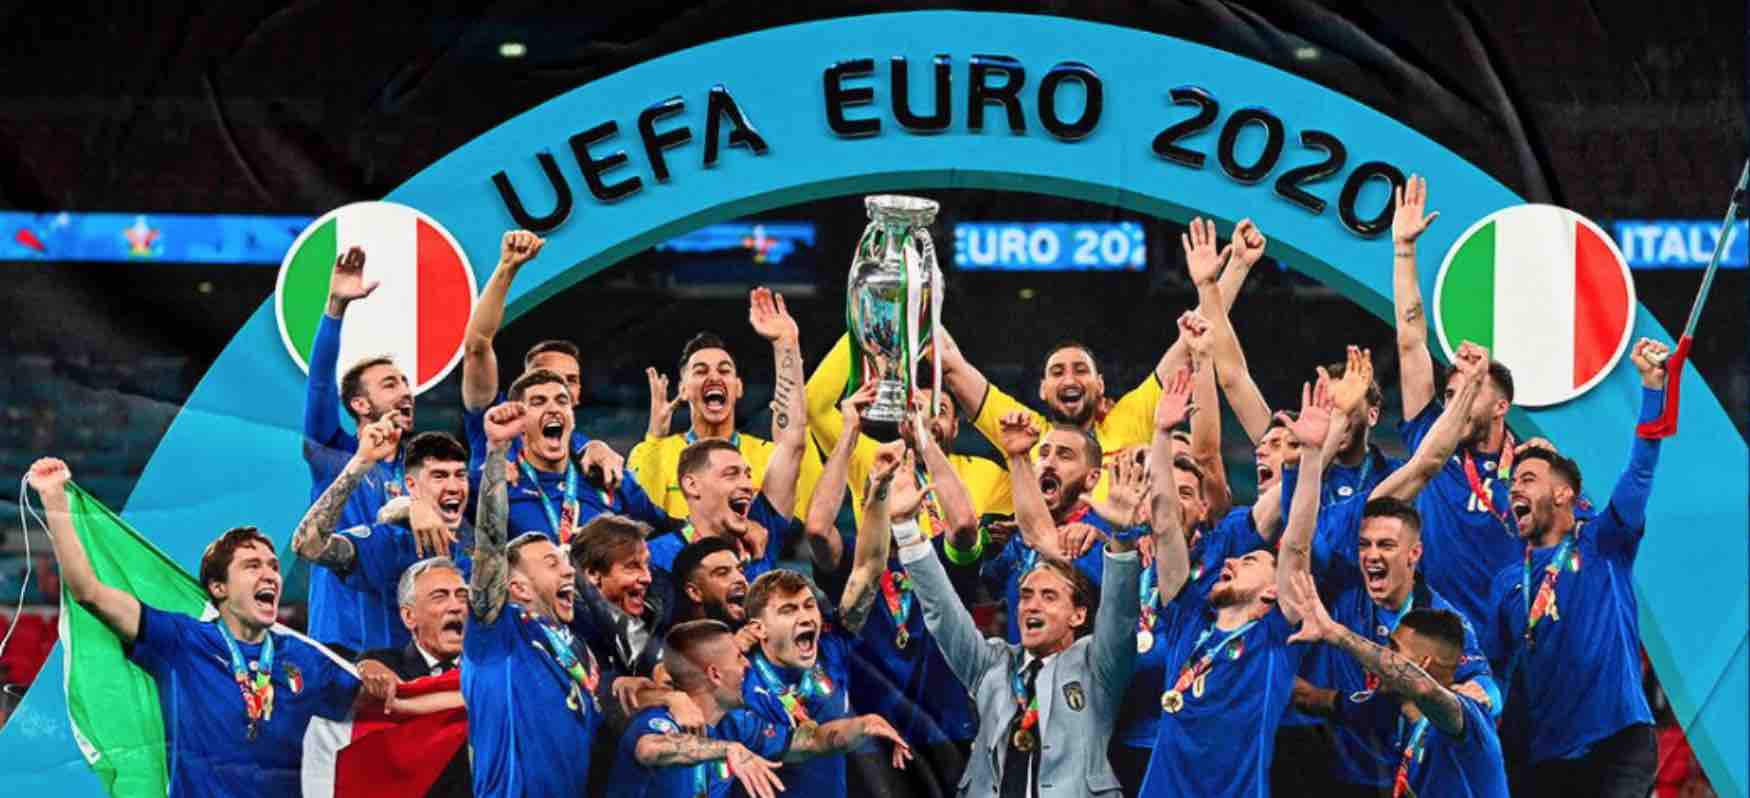 Incredibile Italia, battuta l’Inghilterra ai rigori: campione d’Europa dopo più di 50 anni